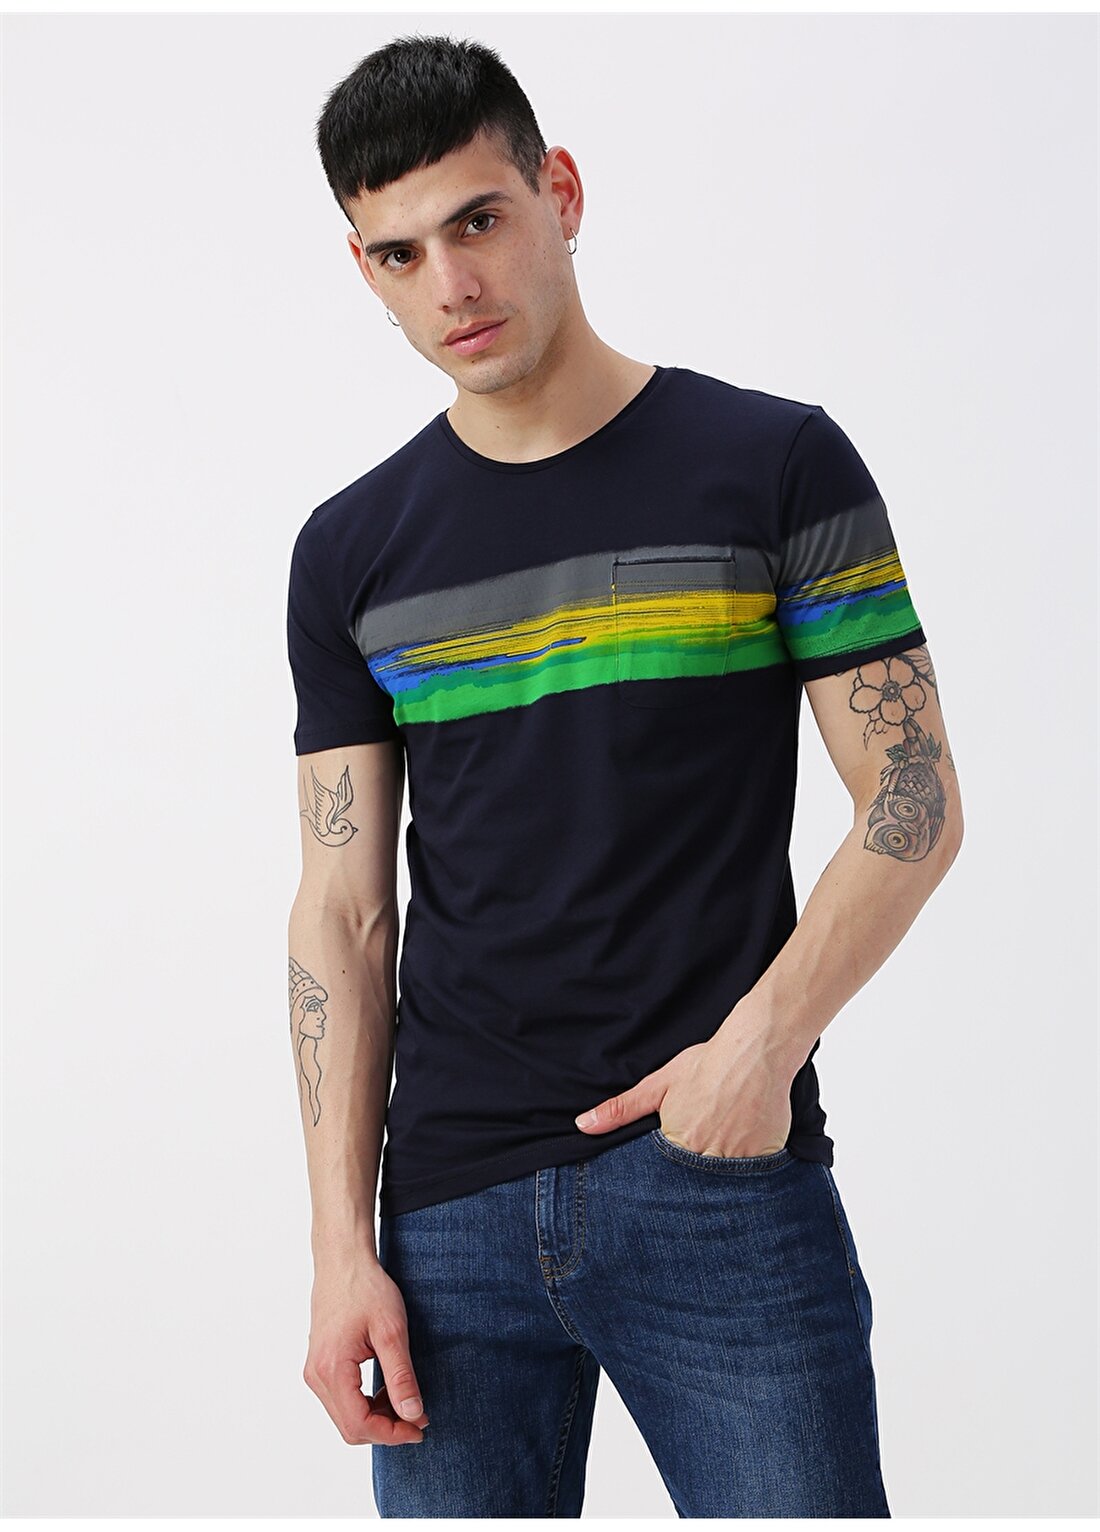 Twister Jeans T-Shirt